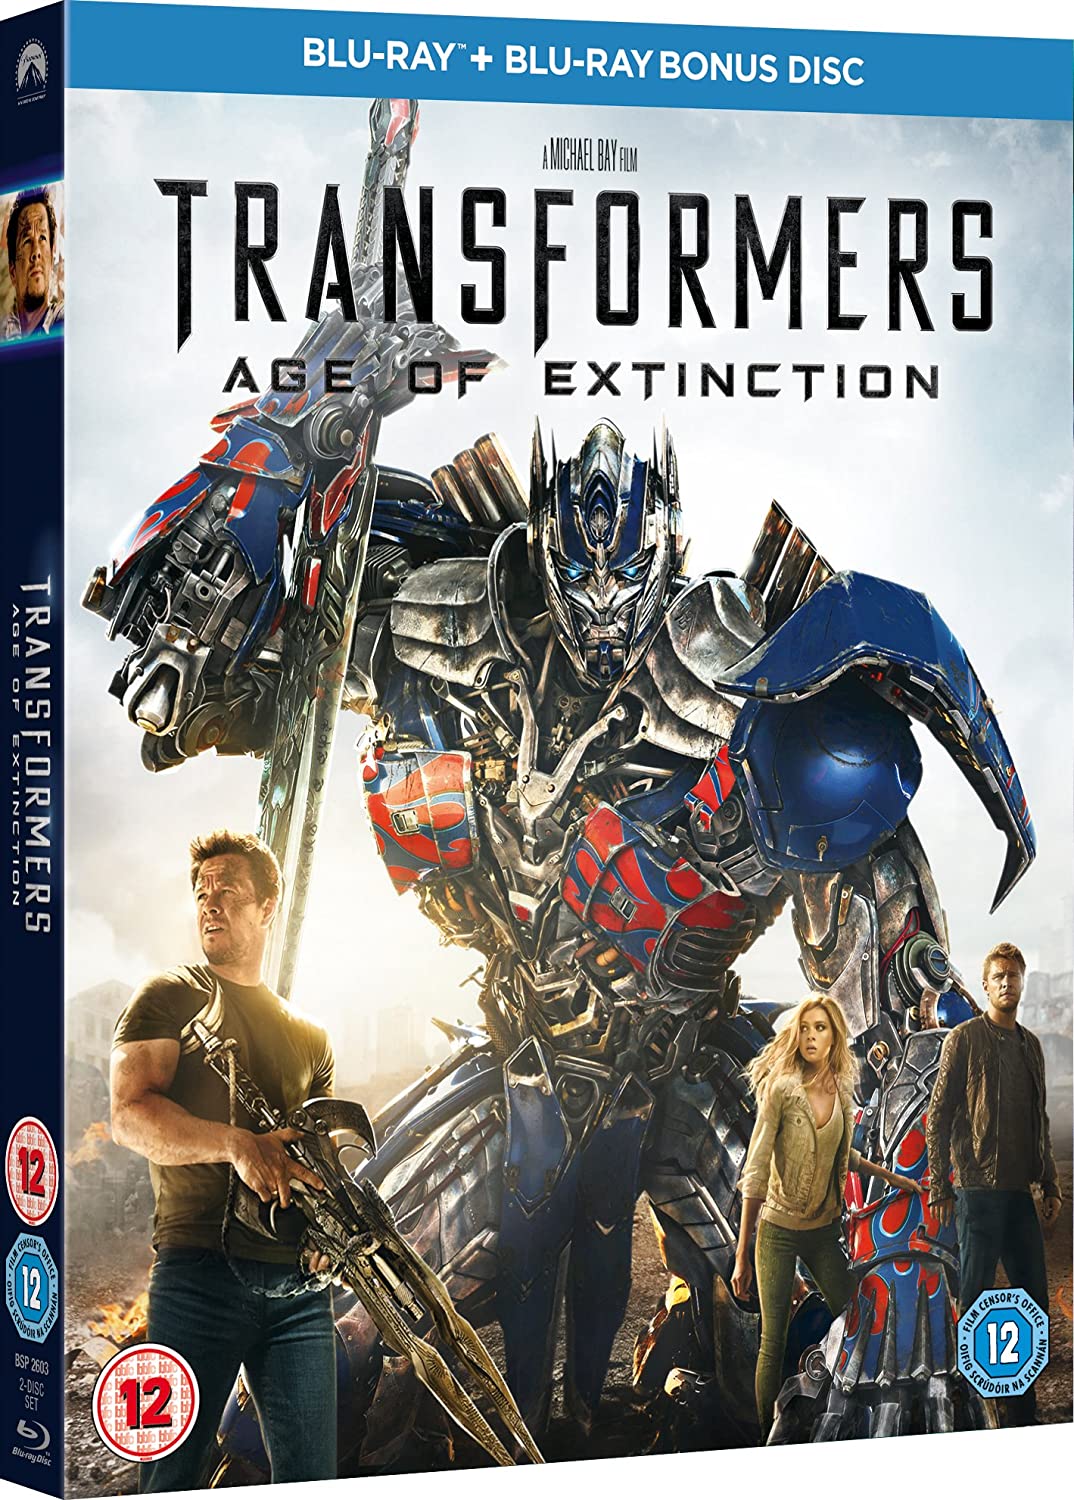 Transformers: Age of Extinction [Blu-ray + Bonus Disc] [Region Free]